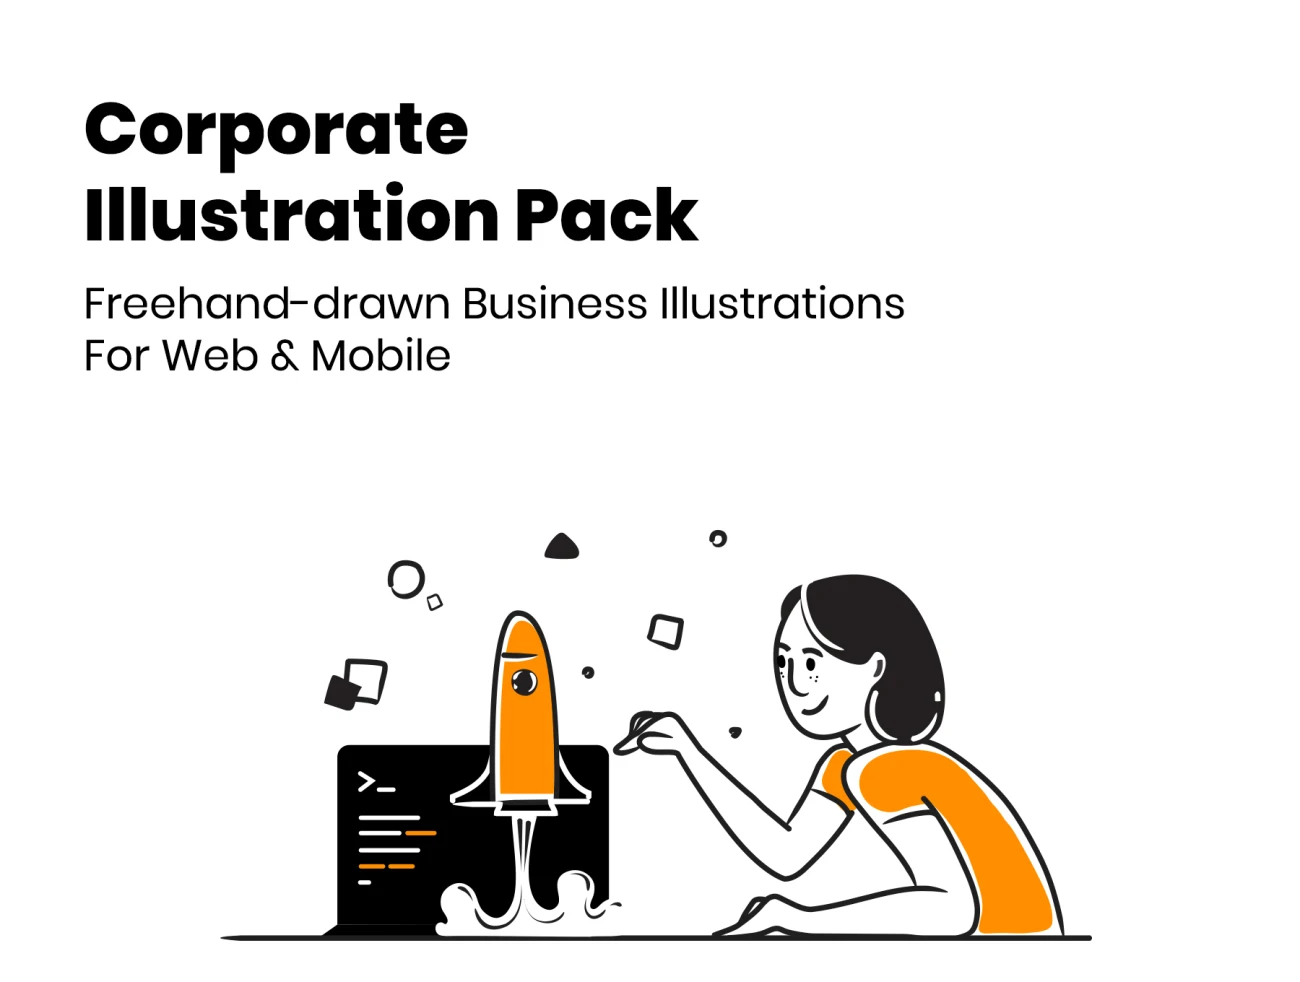 Corporate Illustration Pack 手绘企业商业插图包-人物插画、场景插画、学习生活、插画、教育医疗、概念创意、状态页、电子商务、线条手绘、职场办公、营销创业、趣味漫画-到位啦UI